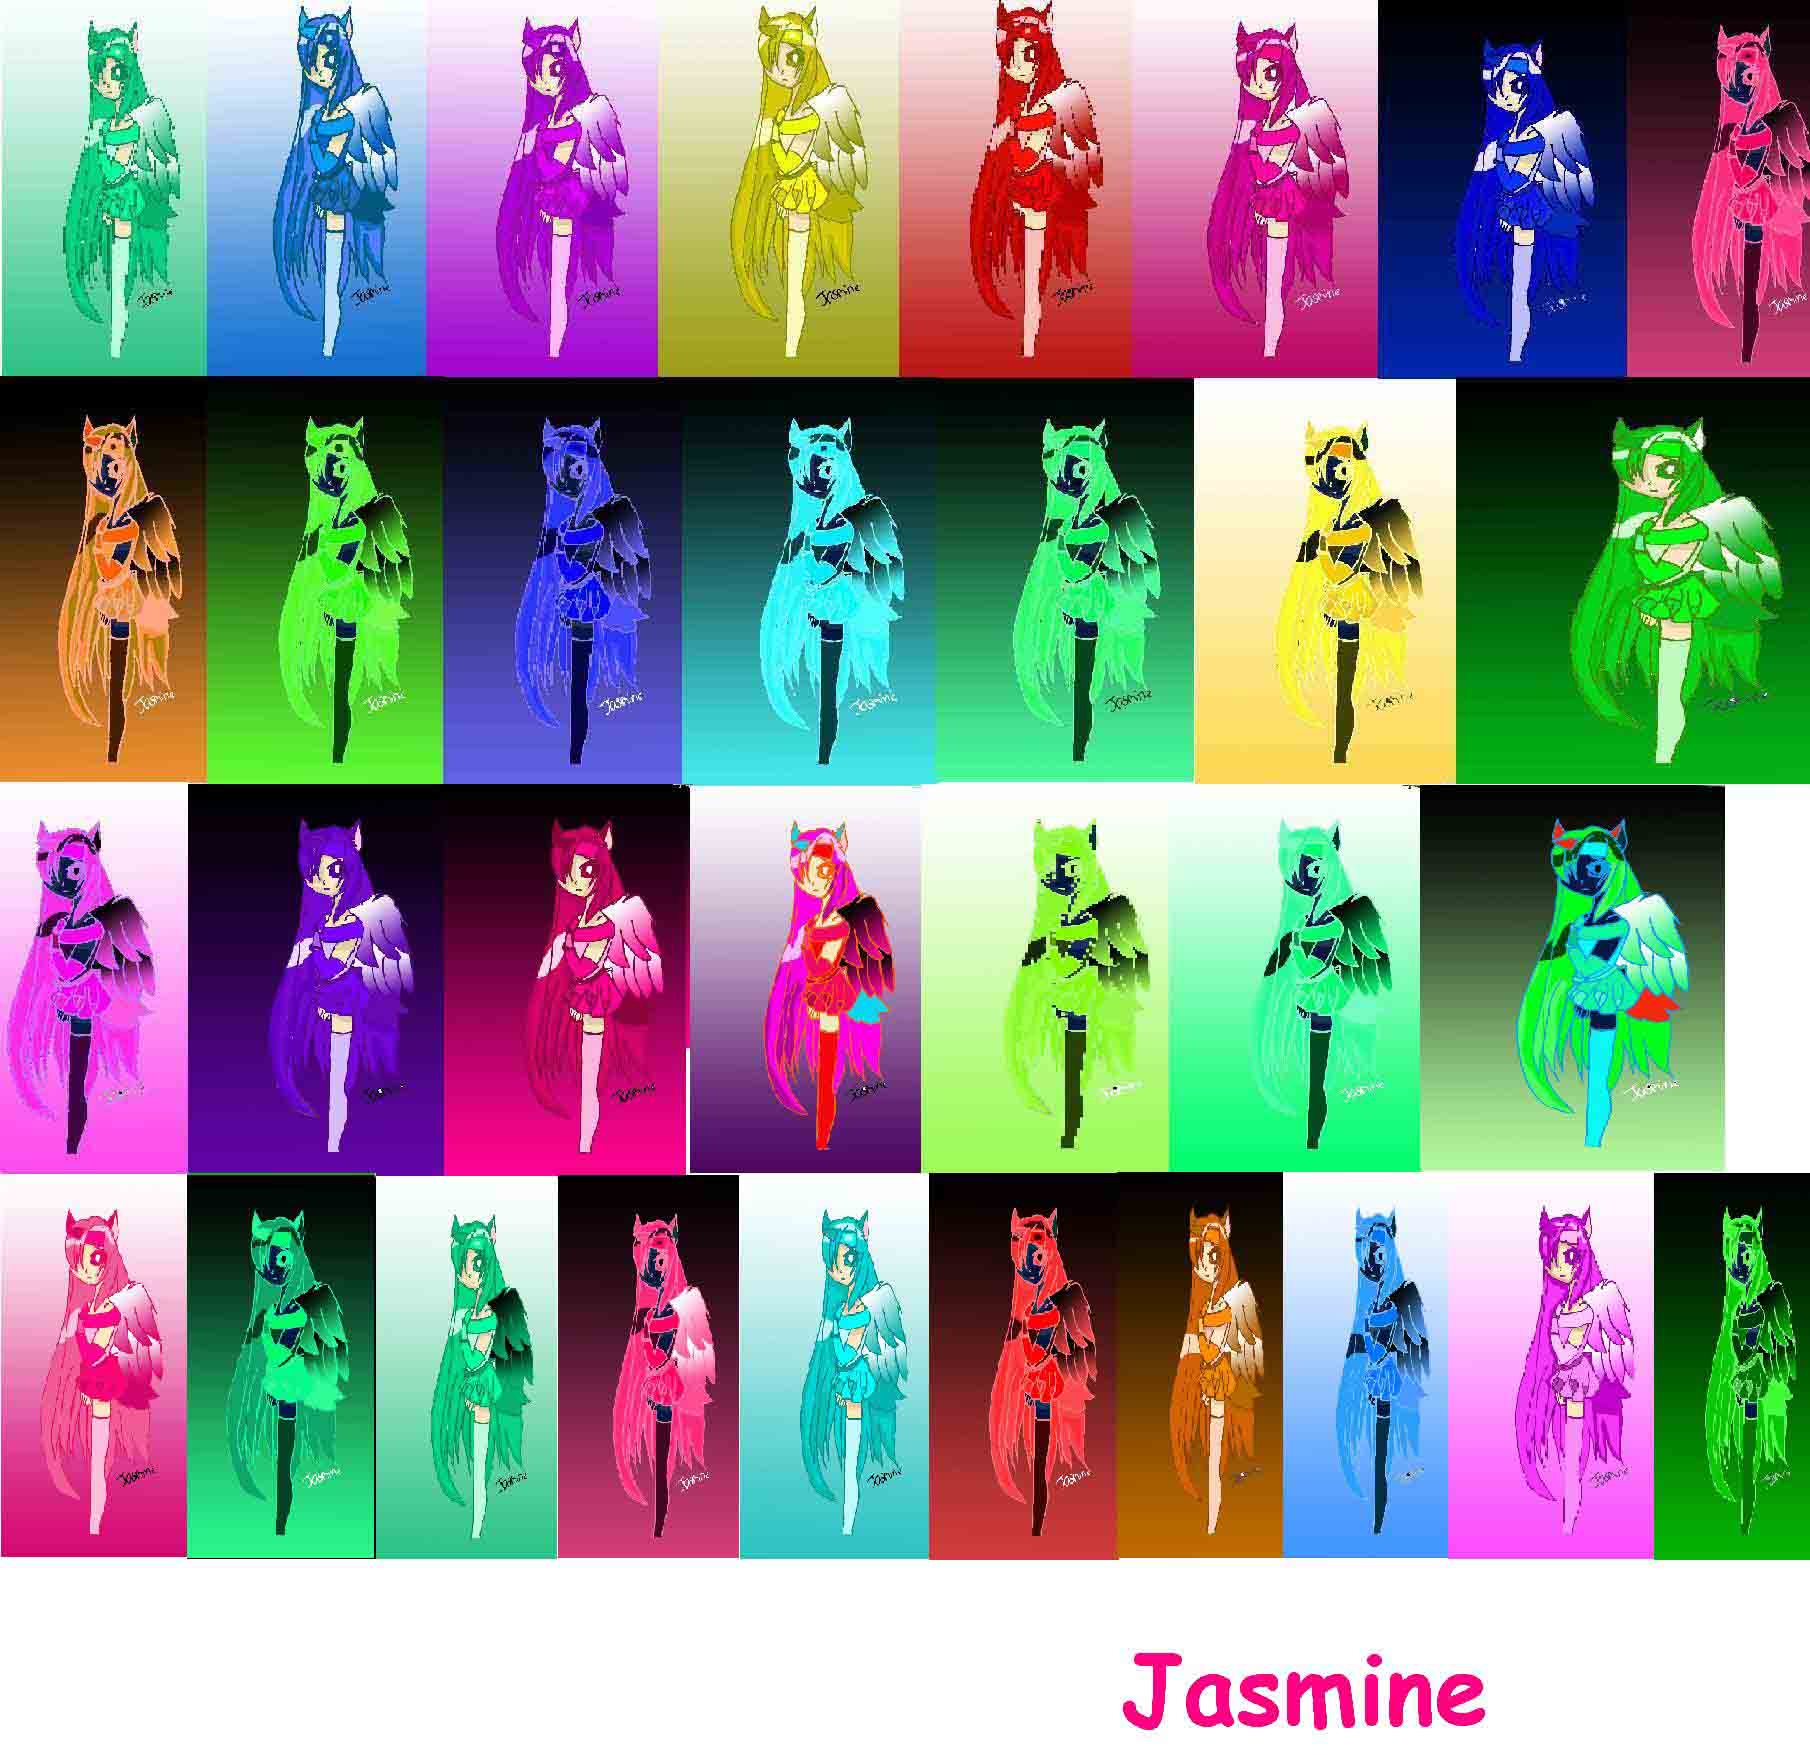 Jasmine colors by Kafaru